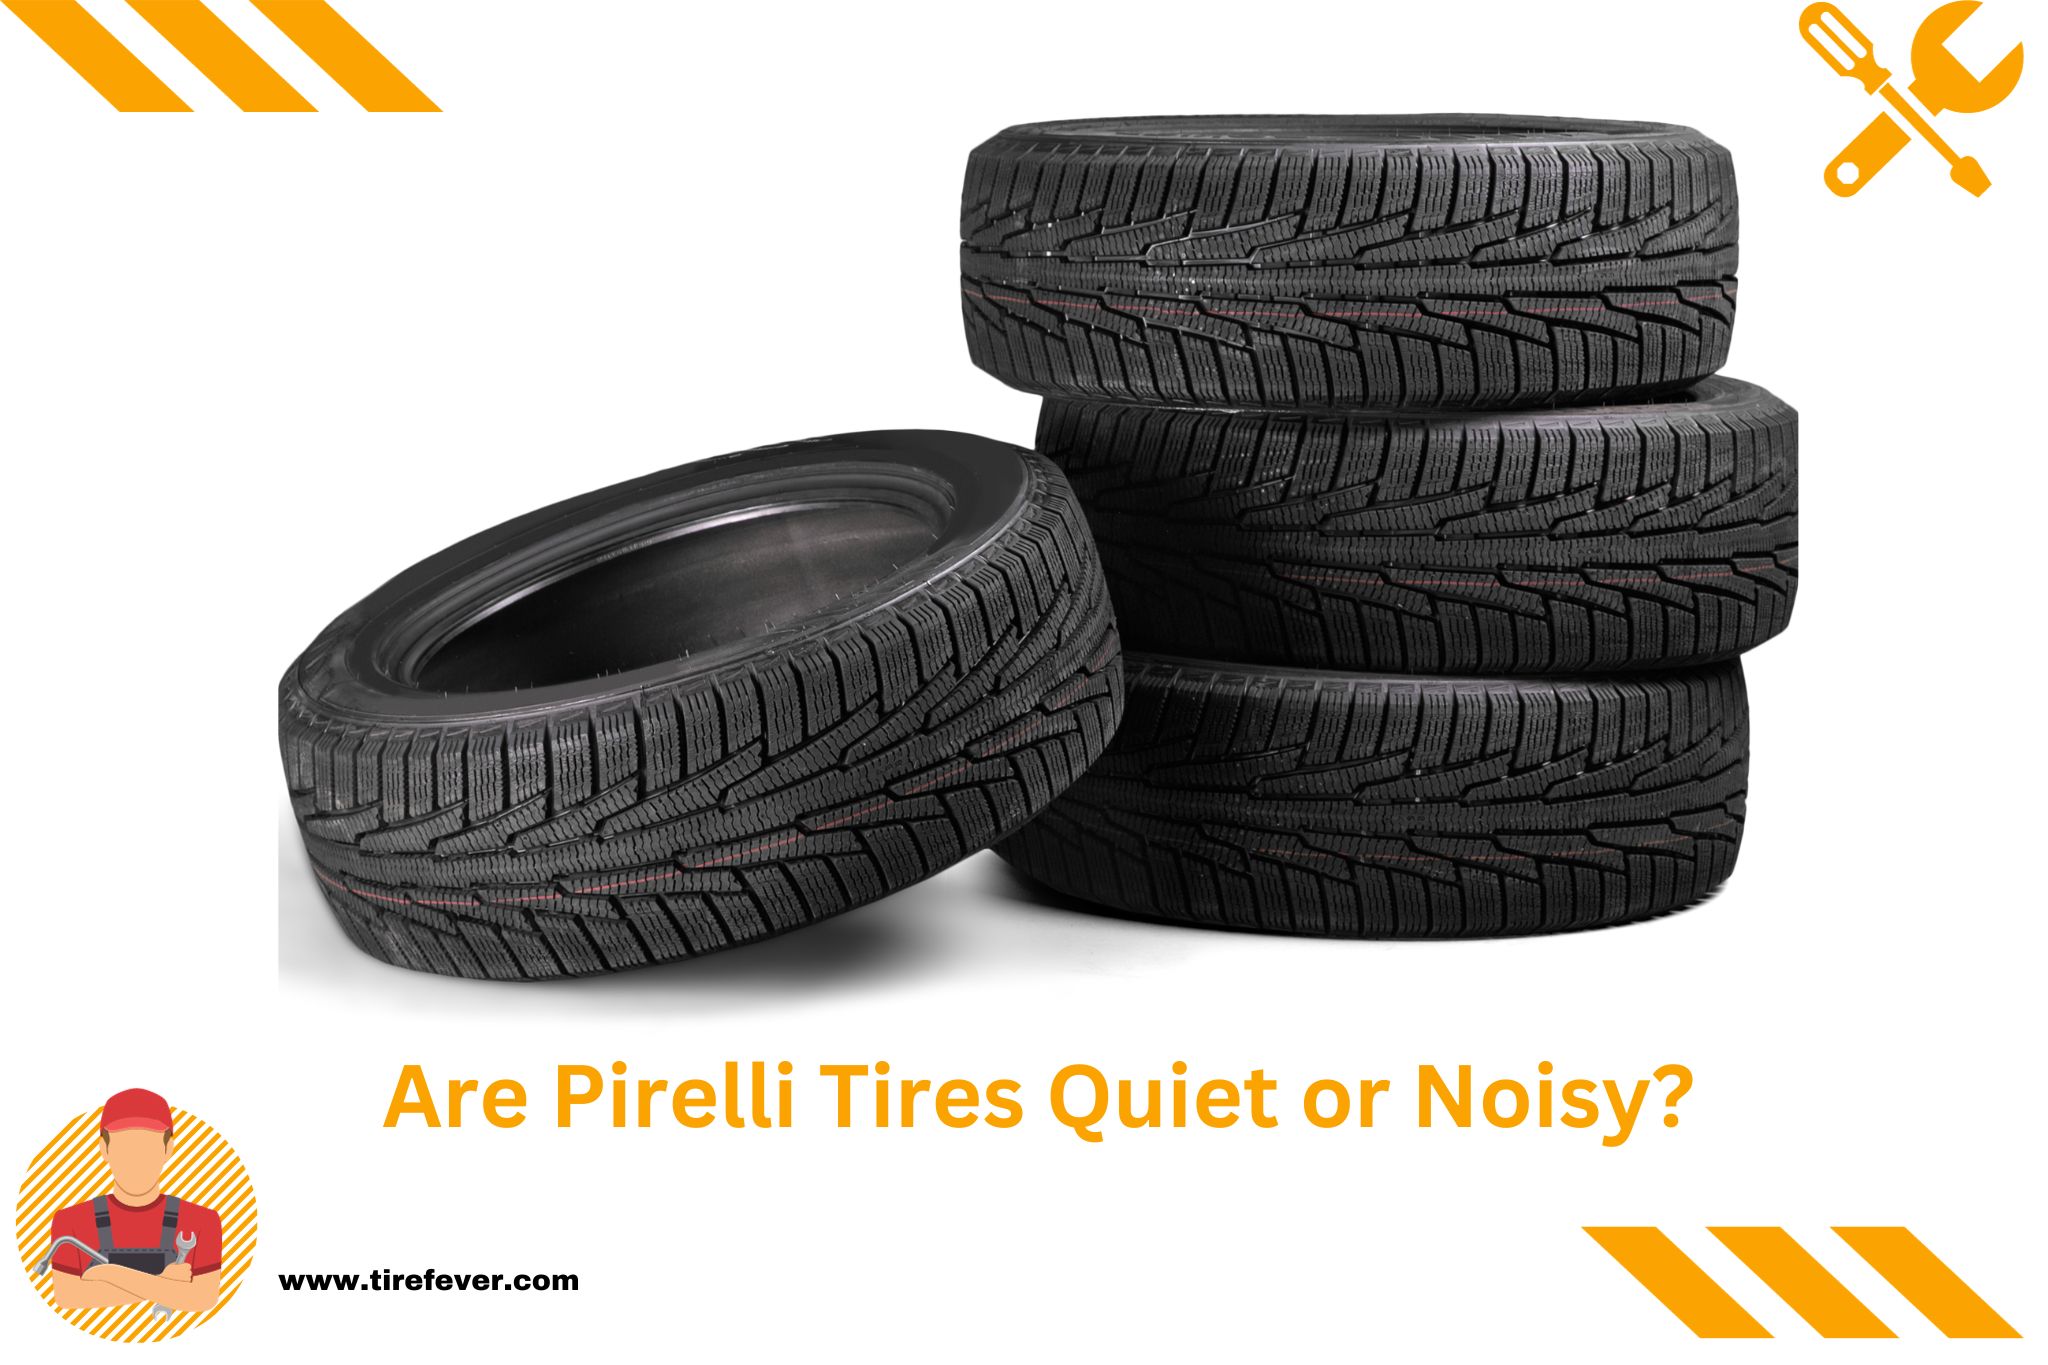 Are Pirelli Tires Quiet or Noisy?